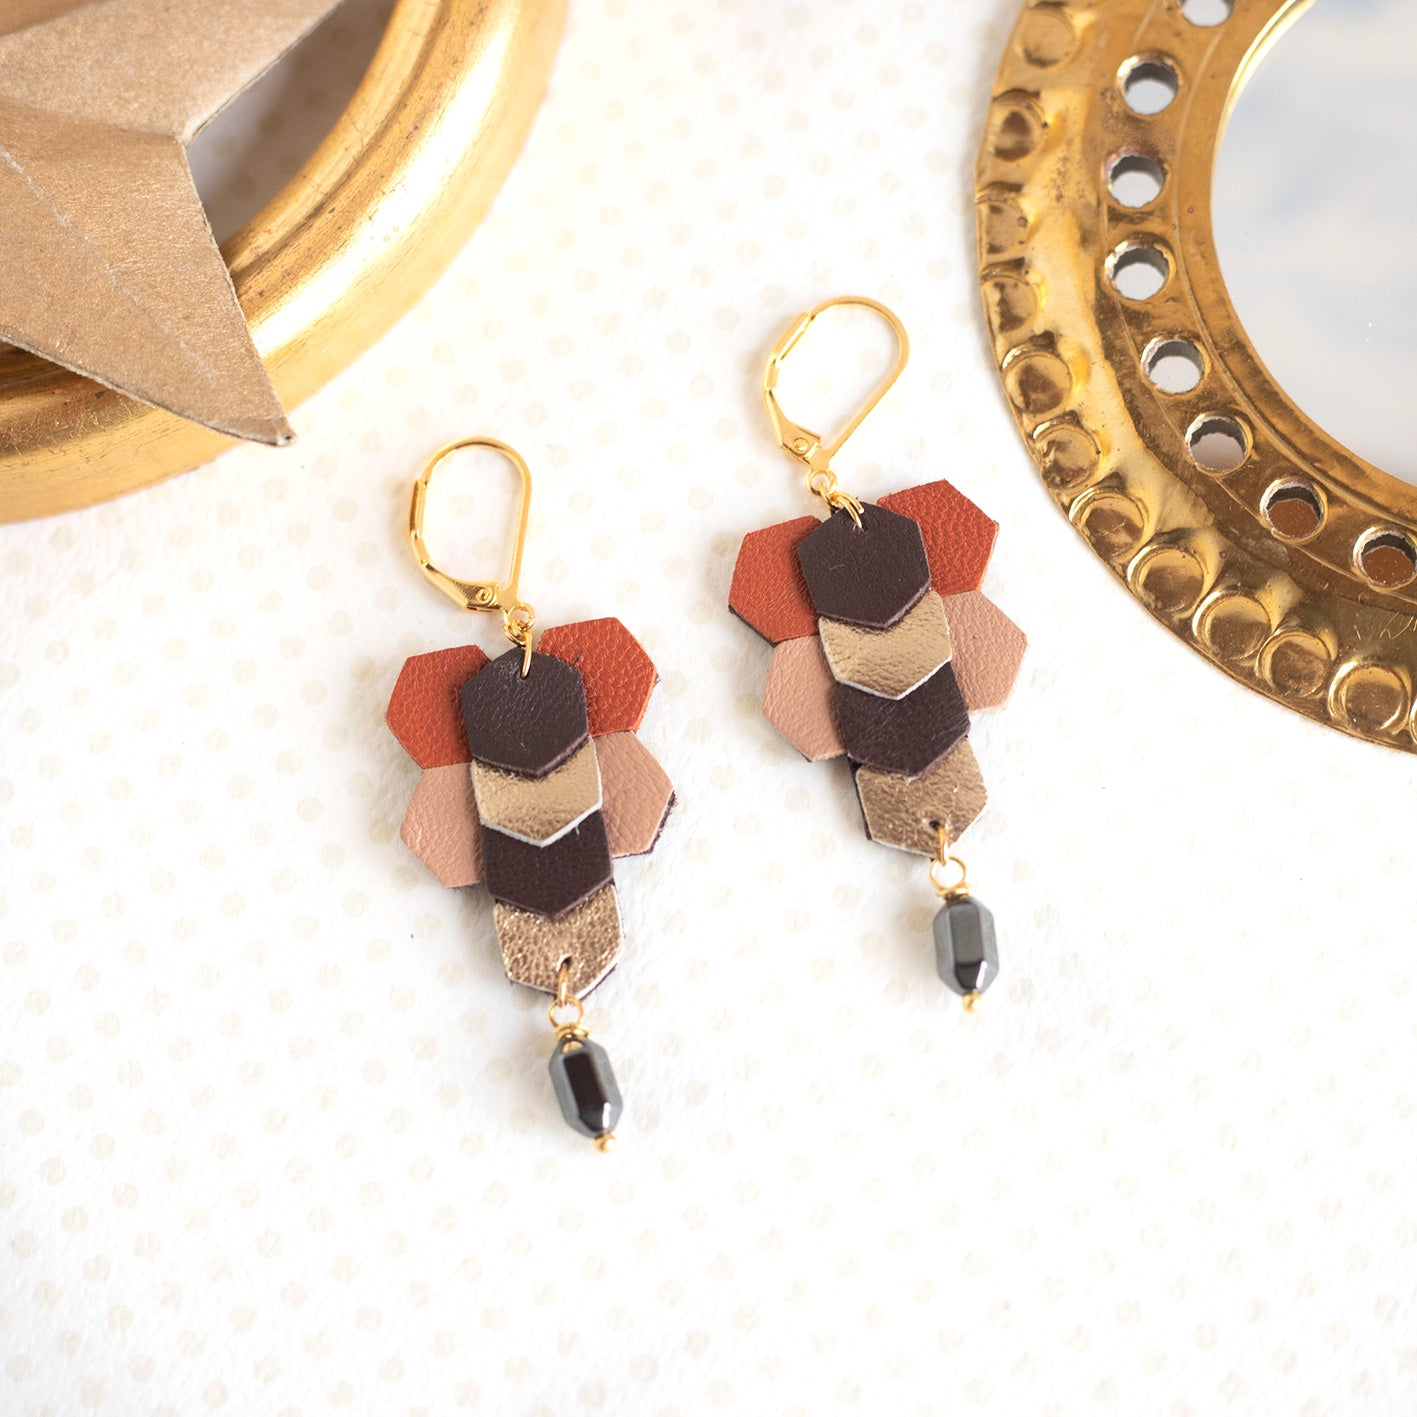 Mini Sixty earrings salmon brown terracotta leather